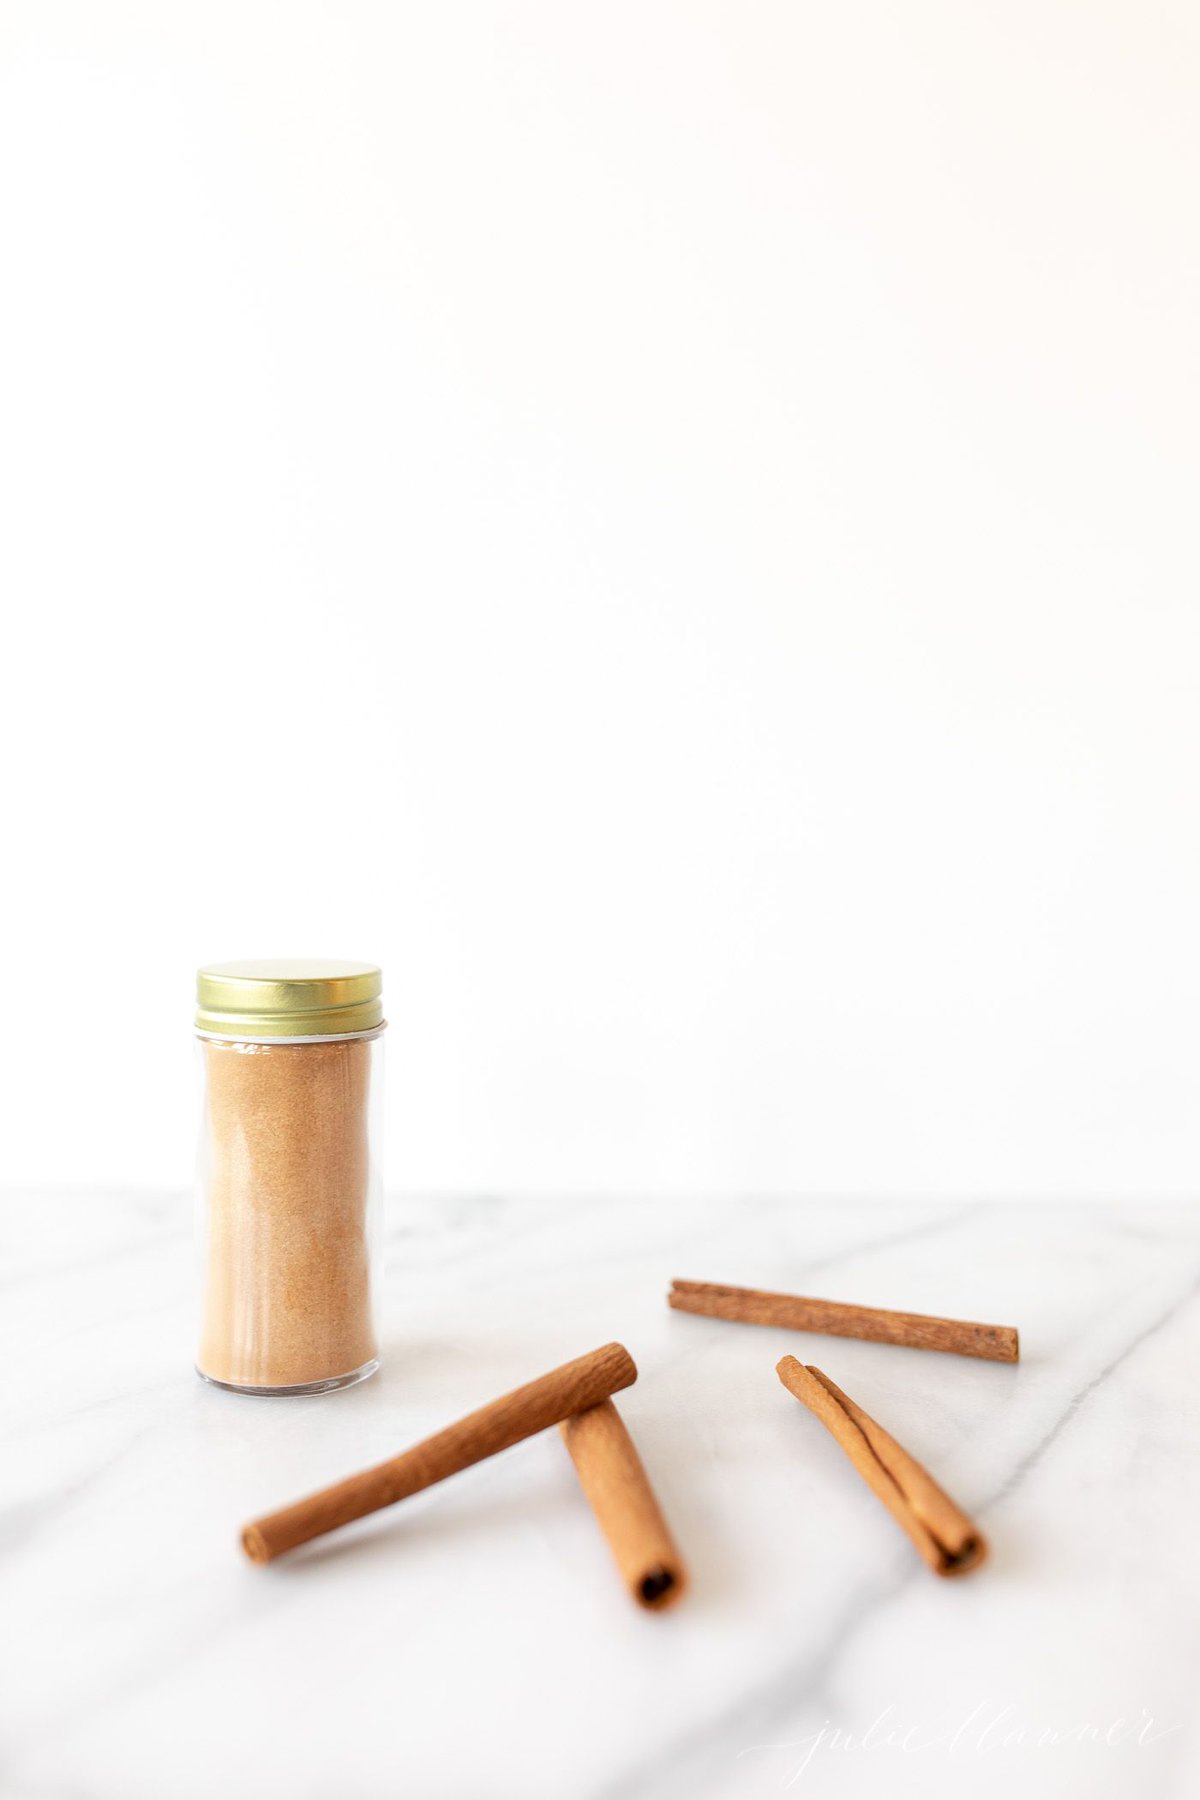 A glass jar of a cinnamon sugar recipe against a white background. Cinnamon sticks scattered around.